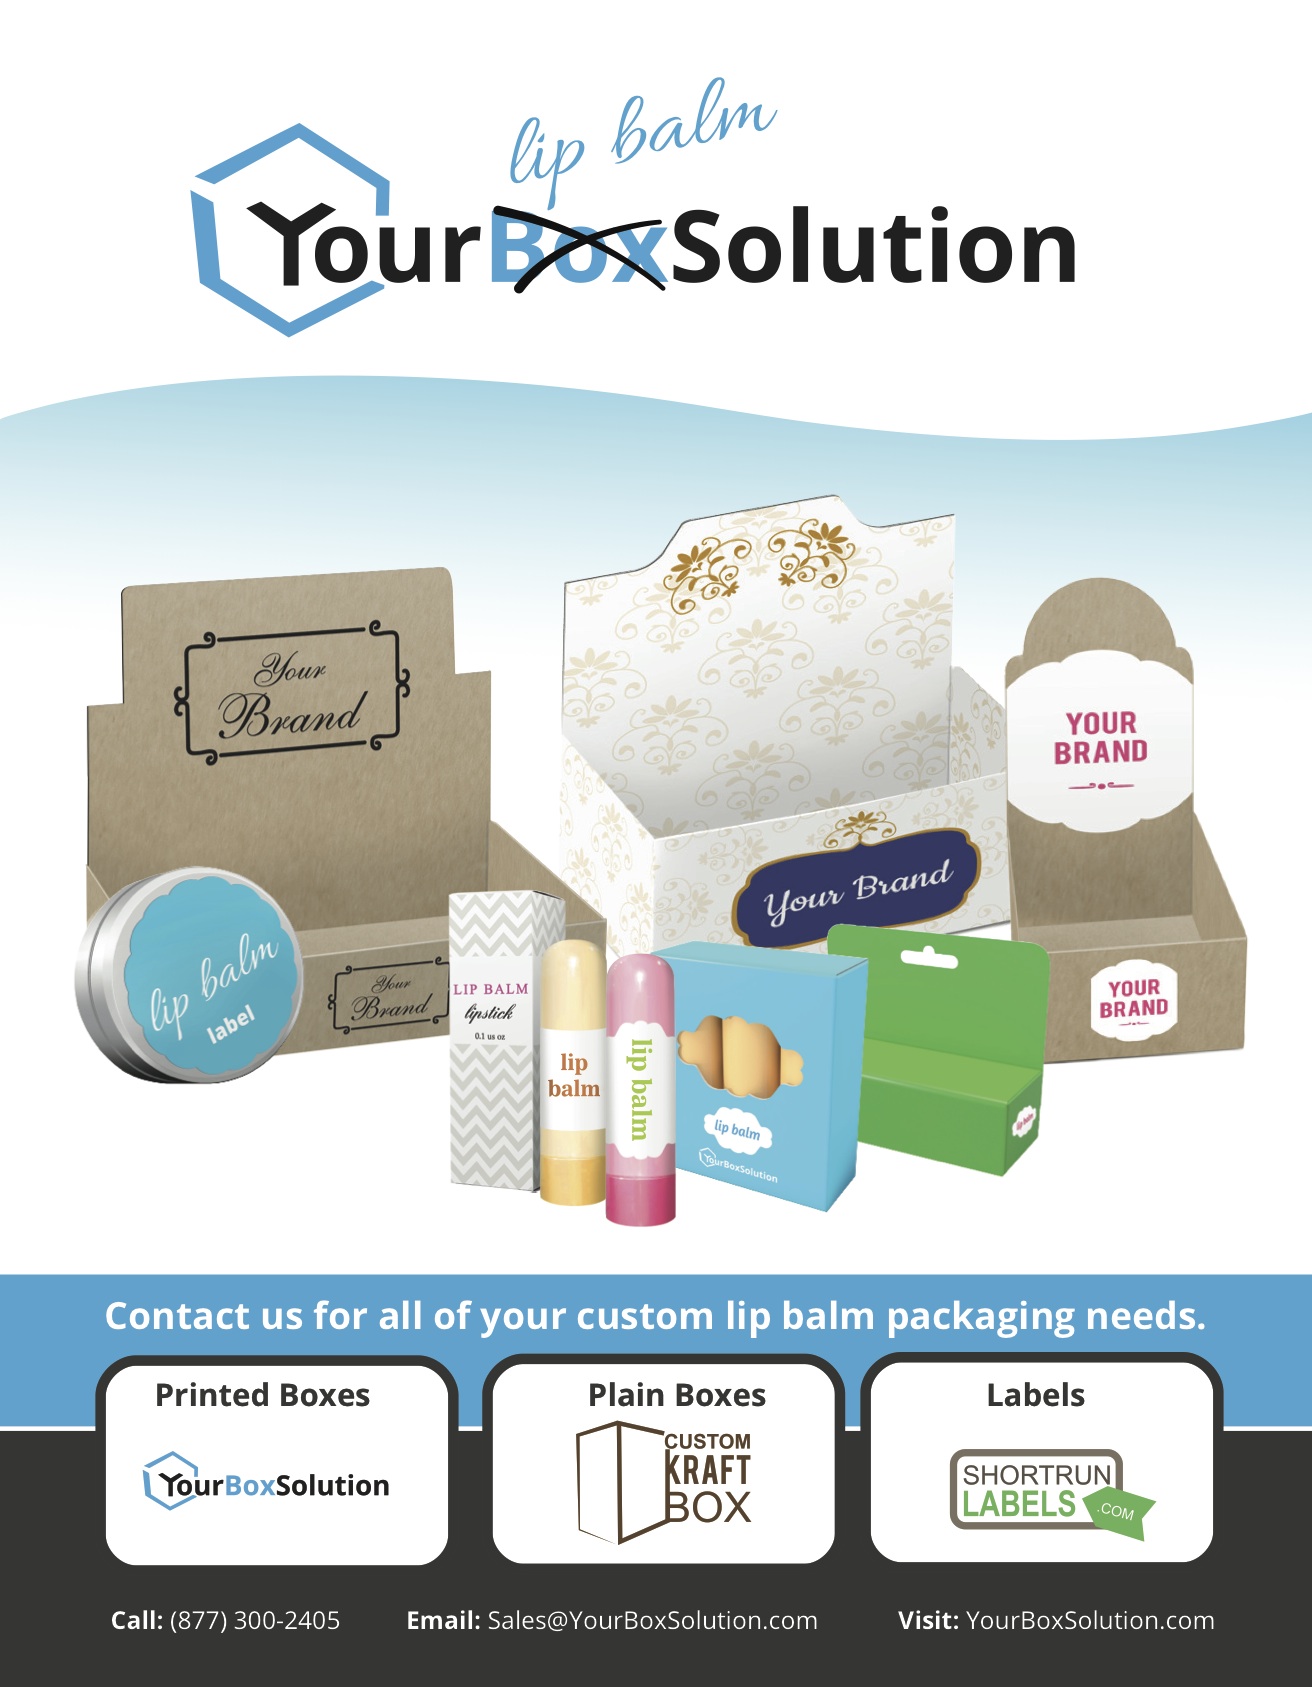 HSCG 2014 – Your Box Solution blog